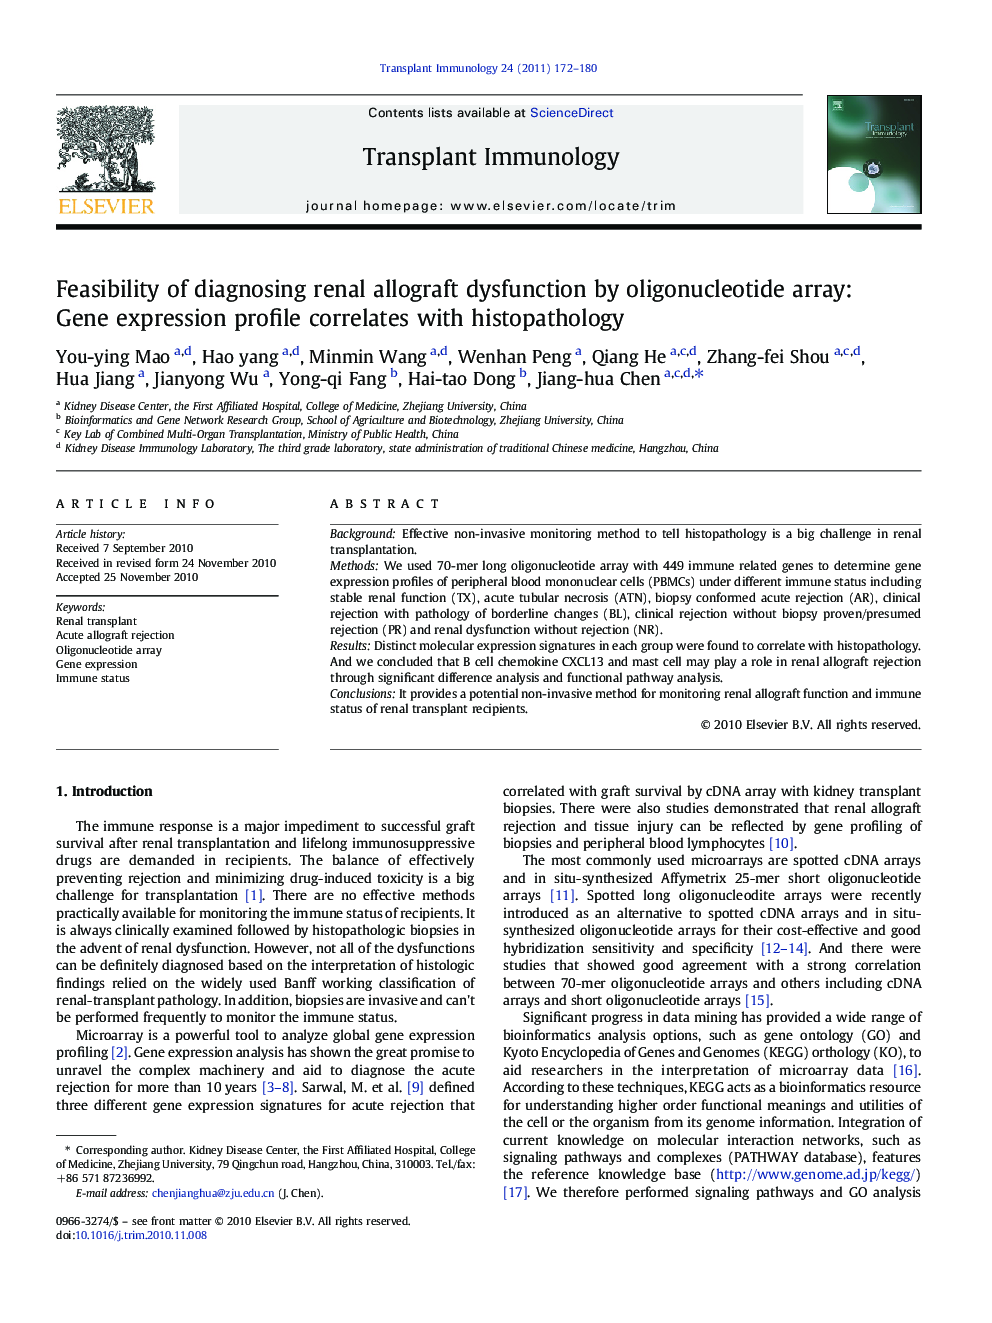 Feasibility of diagnosing renal allograft dysfunction by oligonucleotide array: Gene expression profile correlates with histopathology